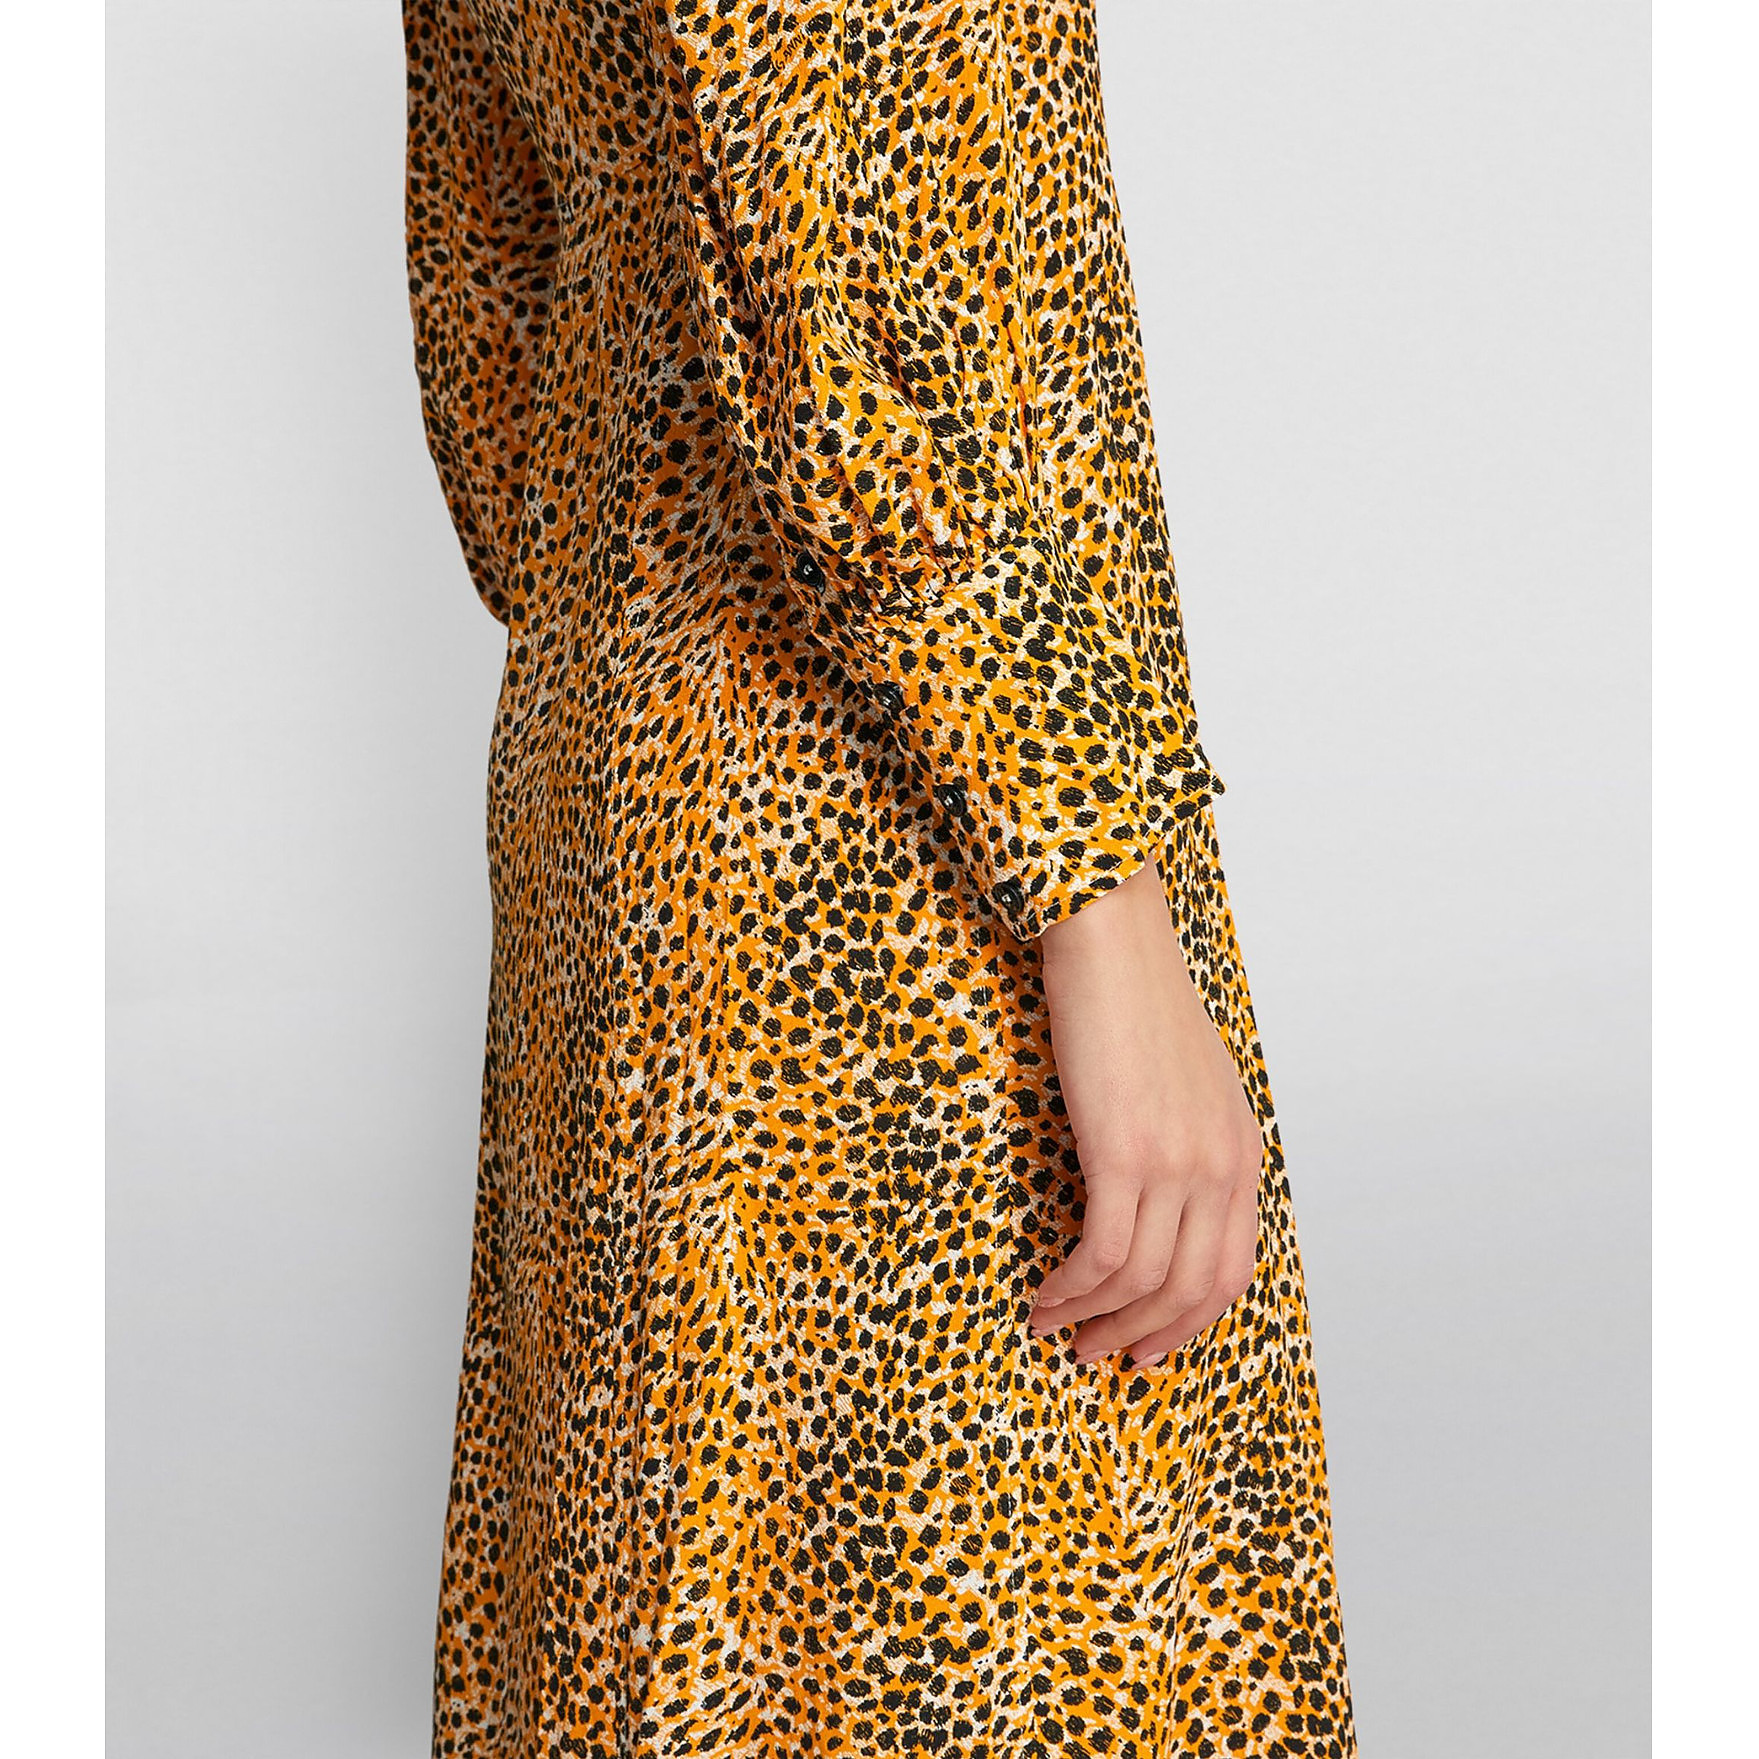 Ganni Collared Leopard Print Dress